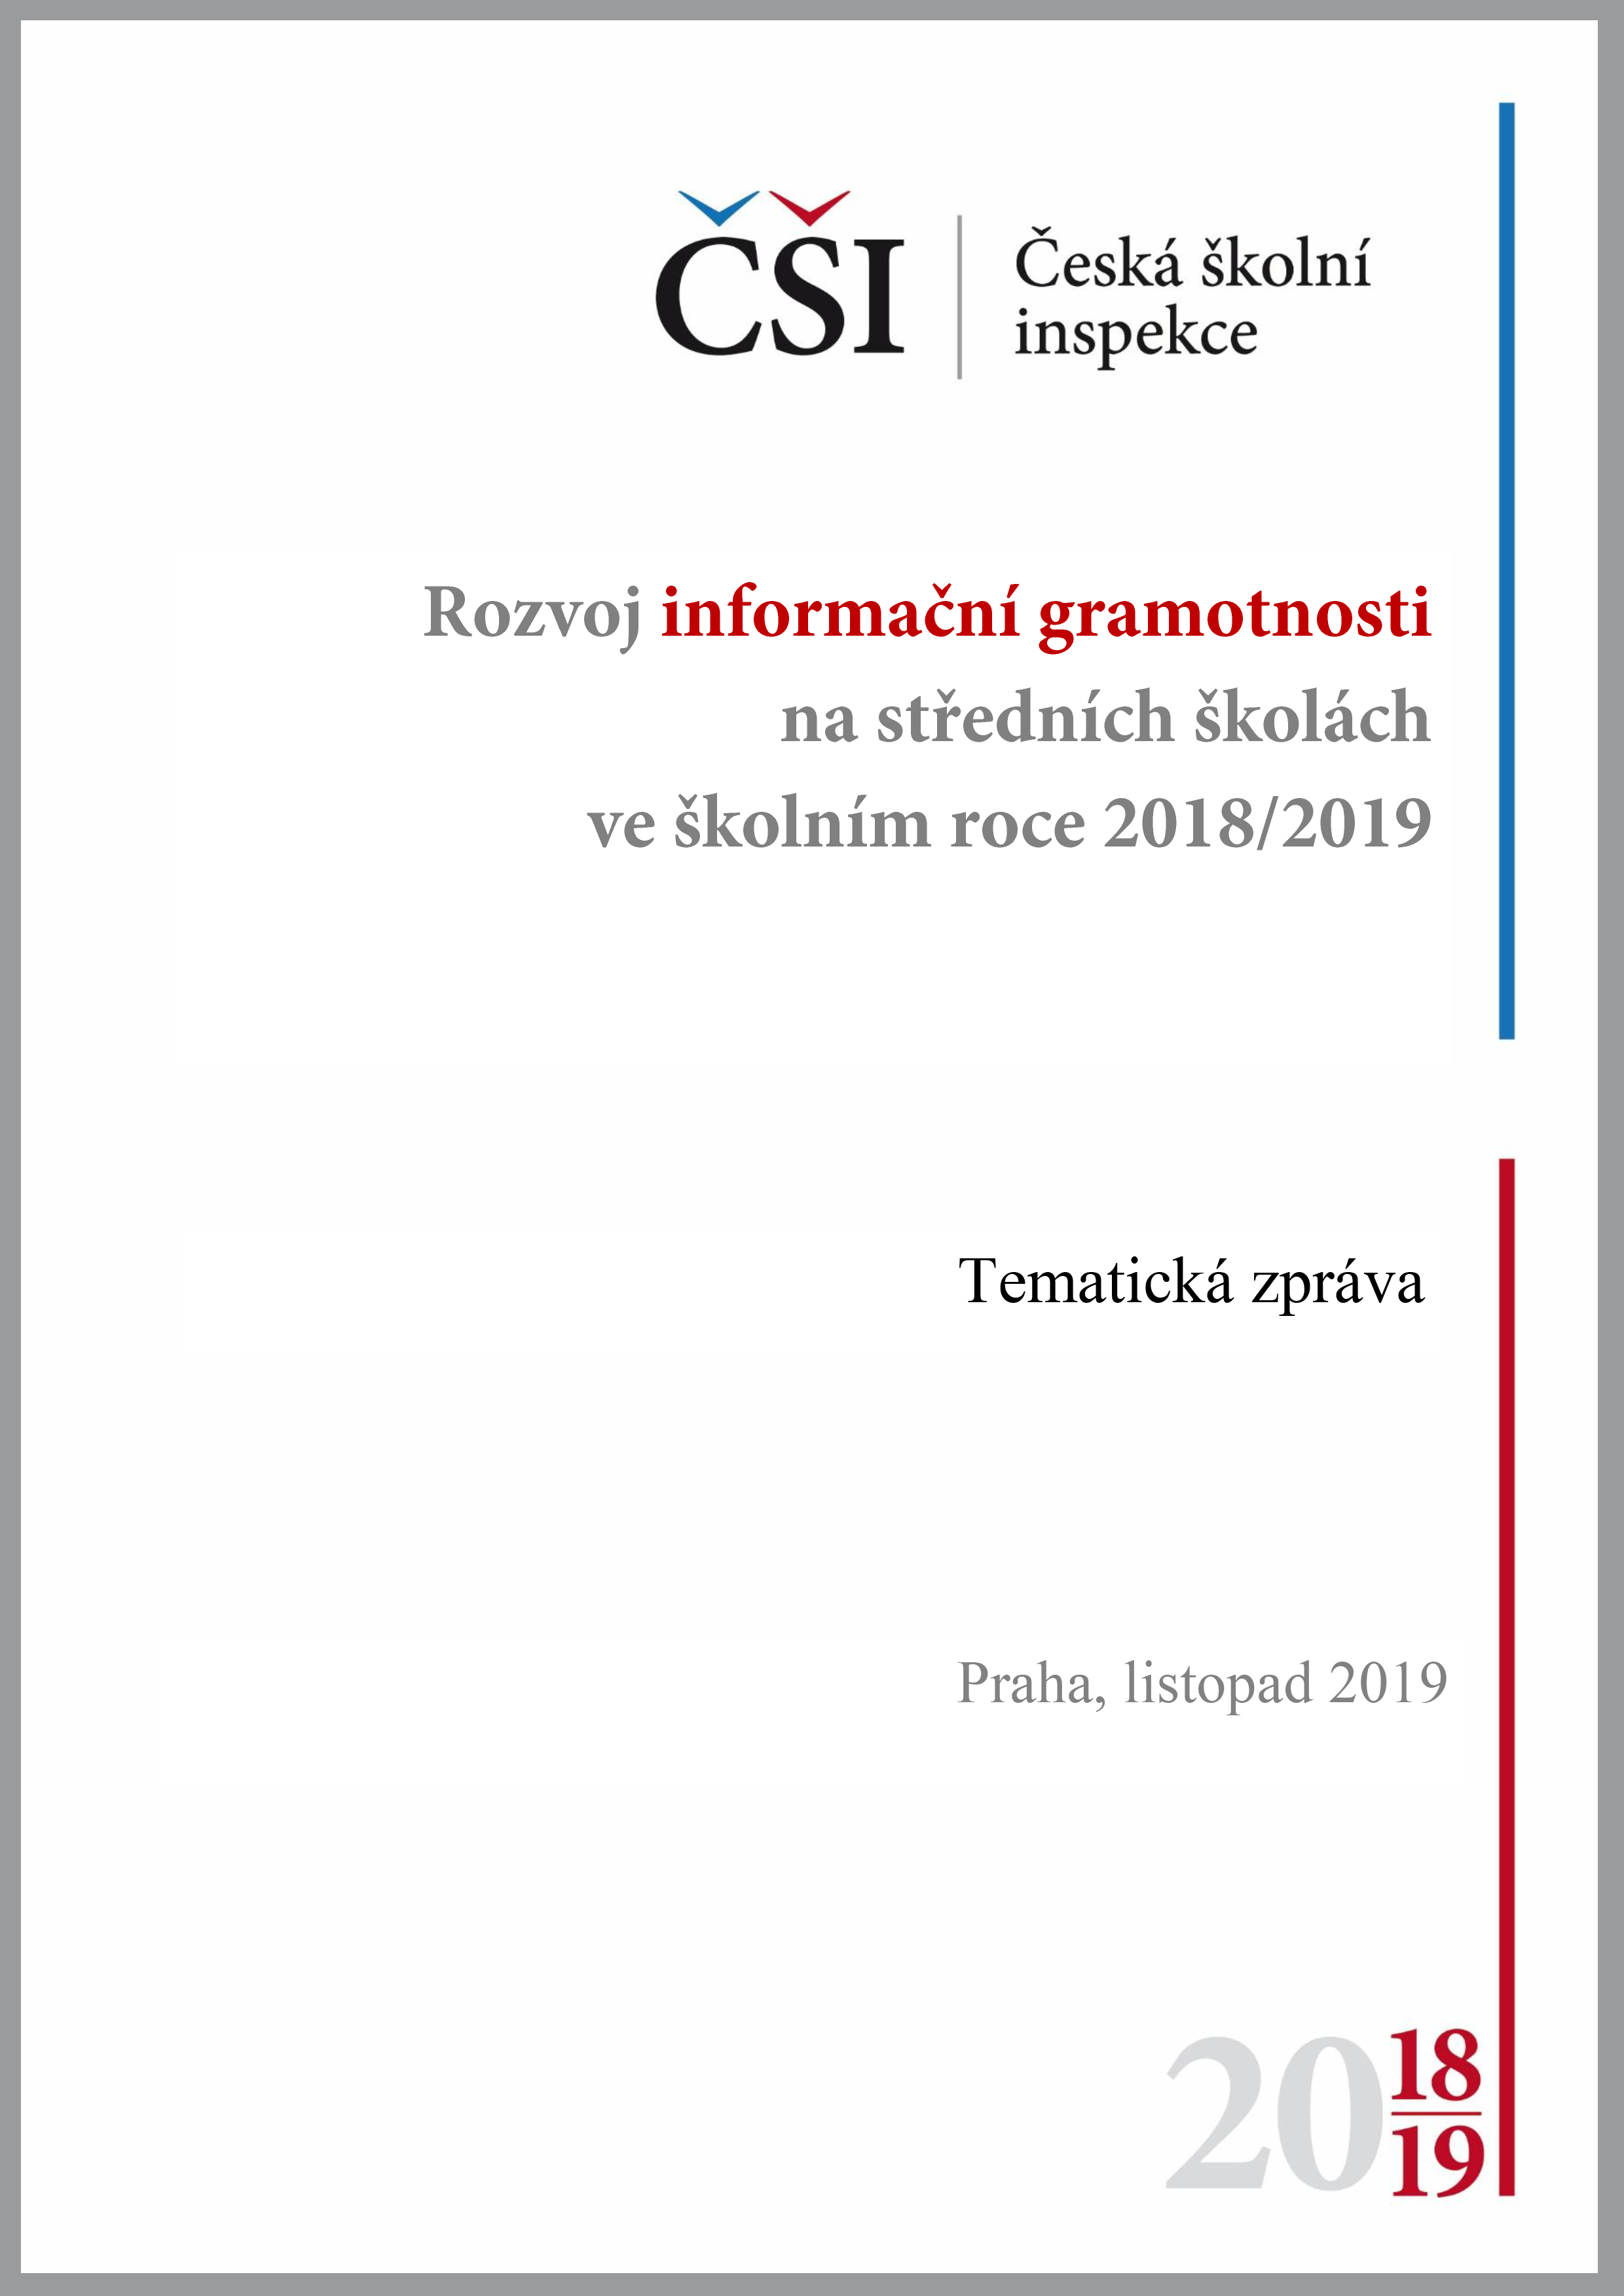 Tematická zpráva - Rozvoj informační gramotnosti na SŠ ve školním roce 2018/2019